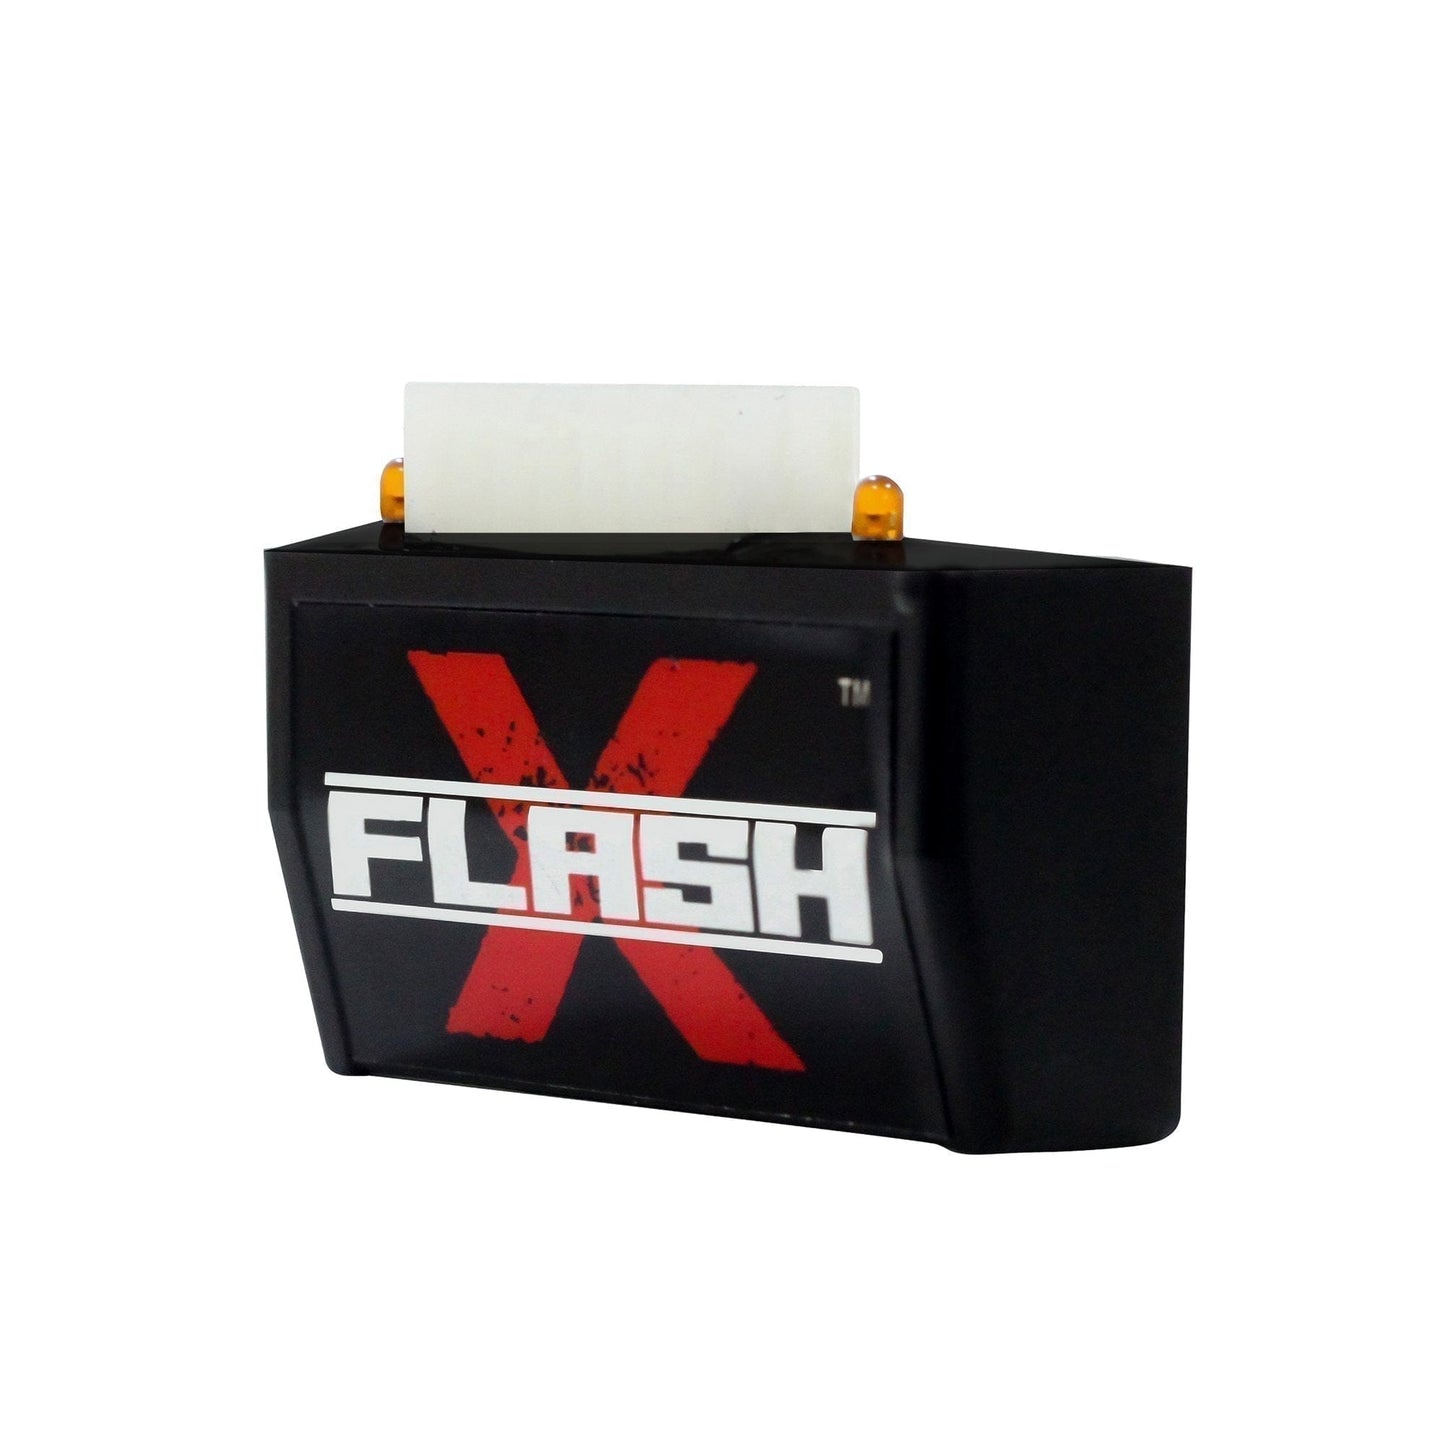 Destination Moto Honda Activa Flash X Hazard Lights Flash Module, Blinker,Flasher